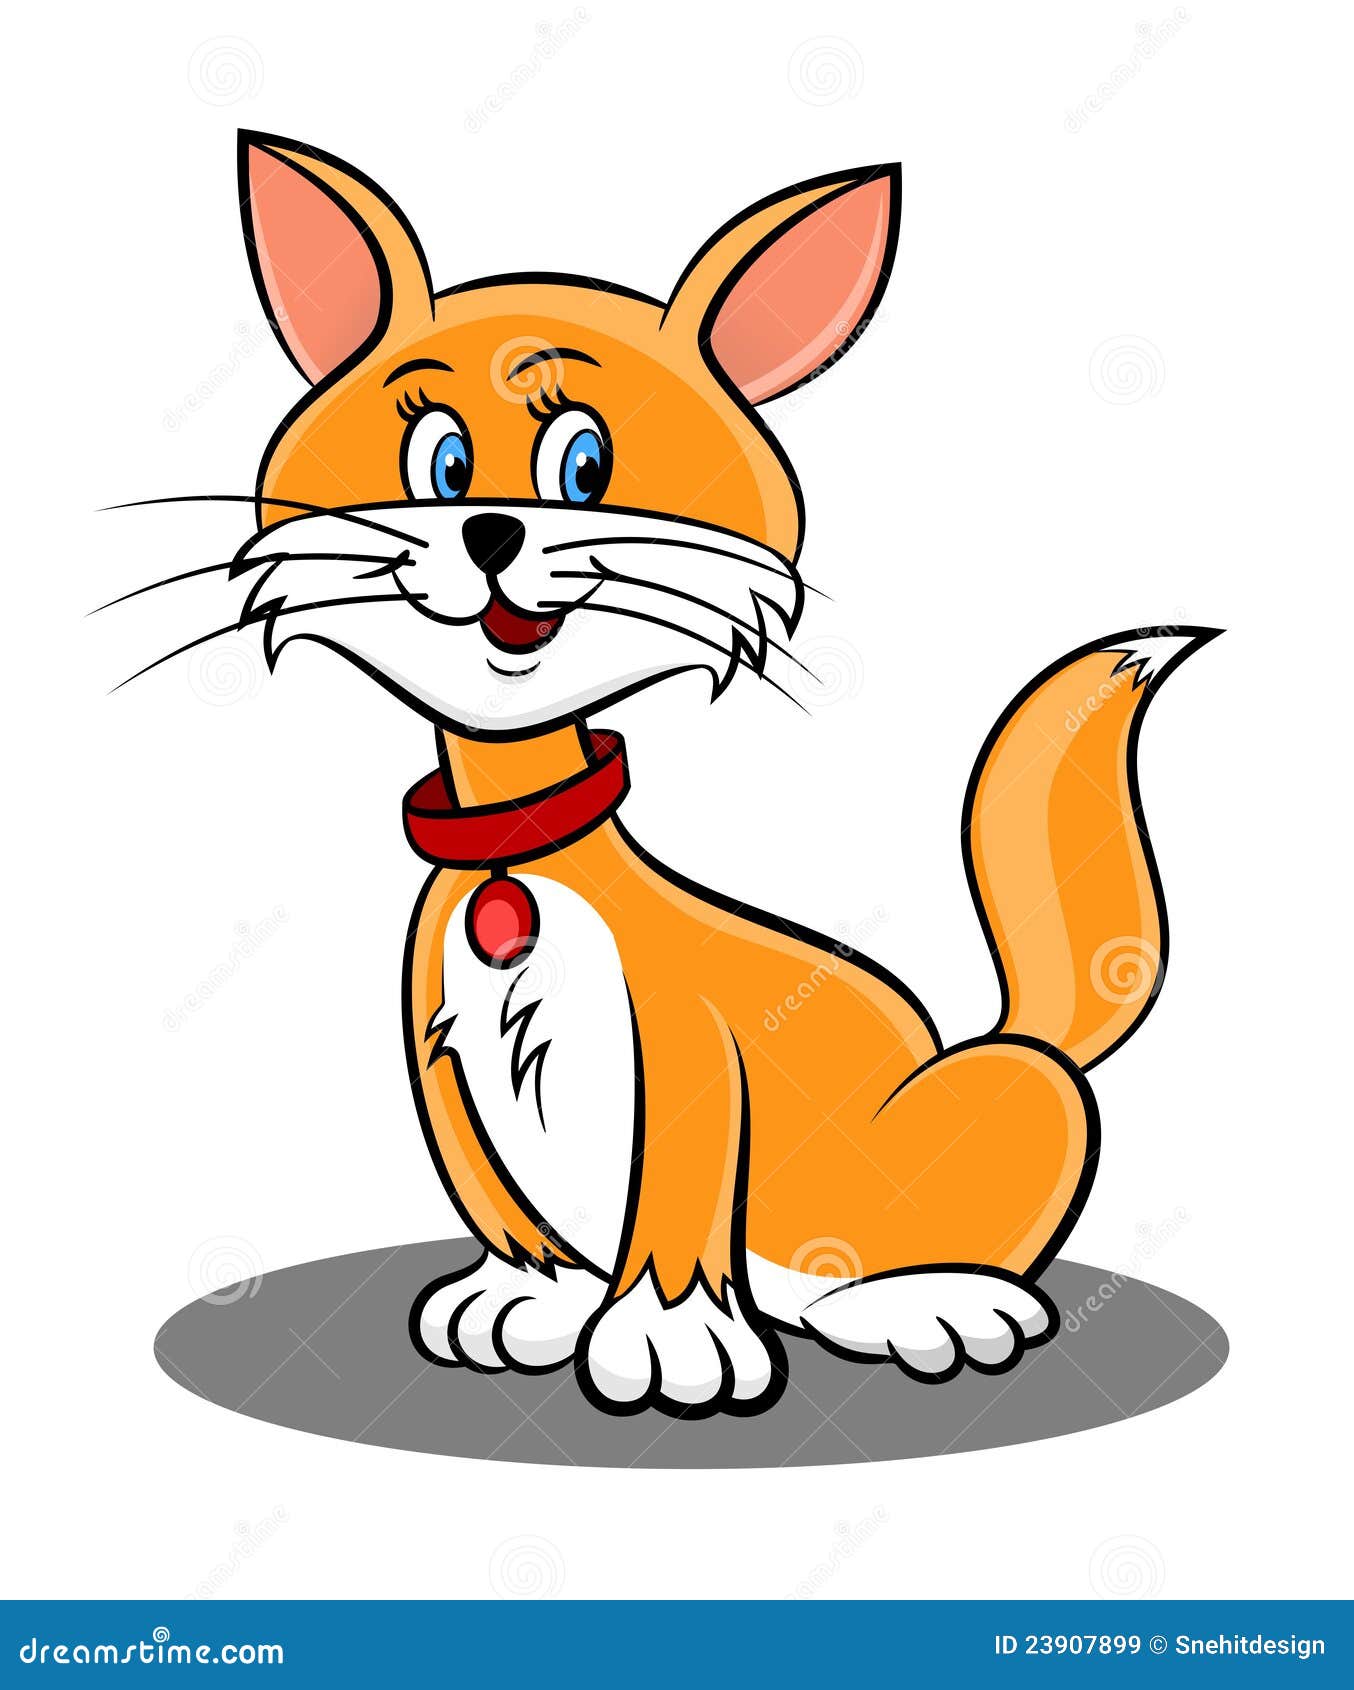 Cute Cat Cartoon Royalty Free Stock Images Image 23907899